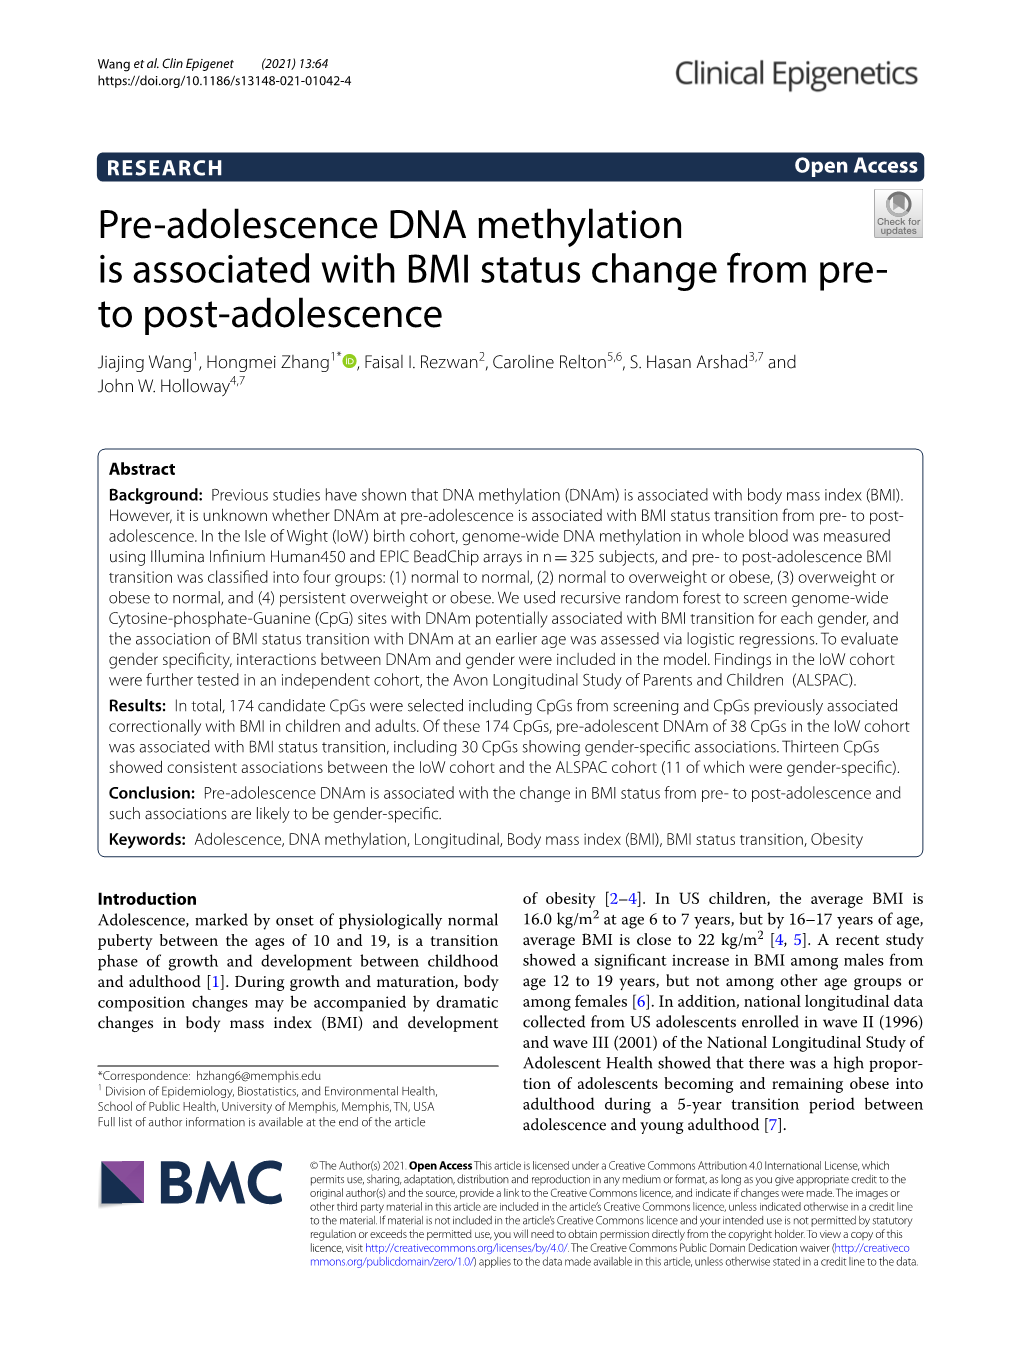 Pre-Adolescence DNA Methylation Is Associated